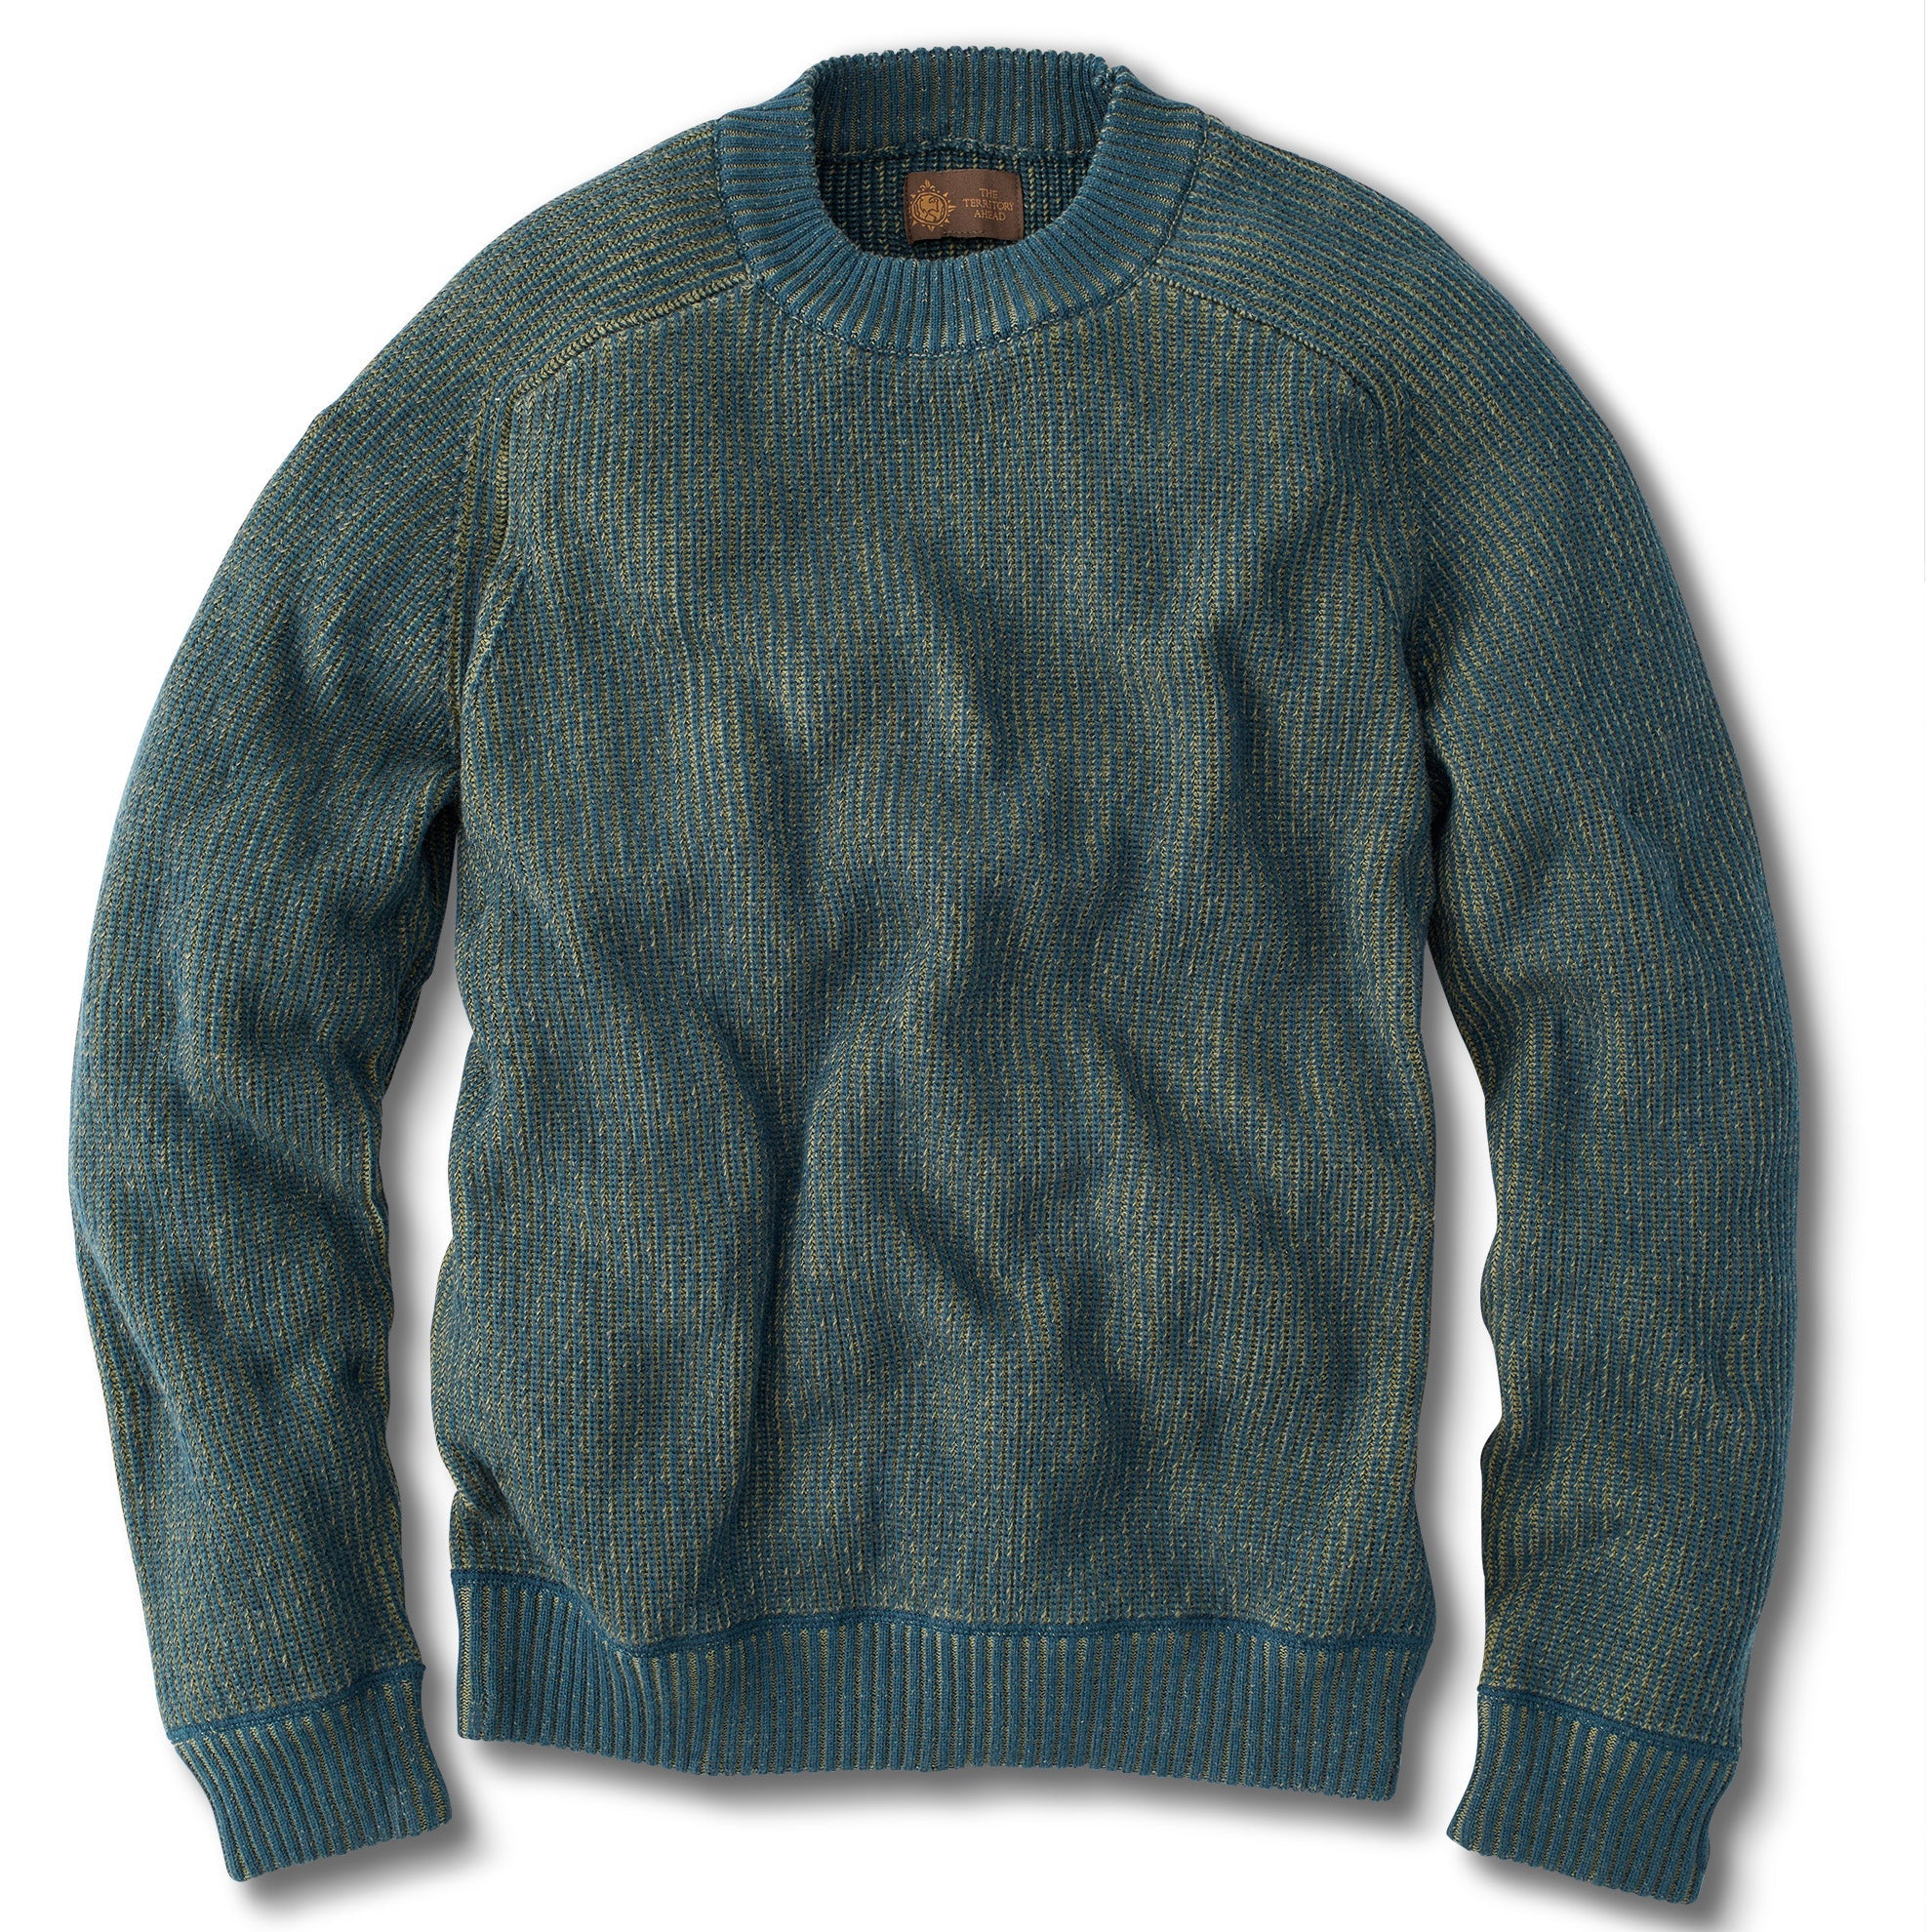 Circa 1969 Cotton Sweatshirt Sweater - Sale